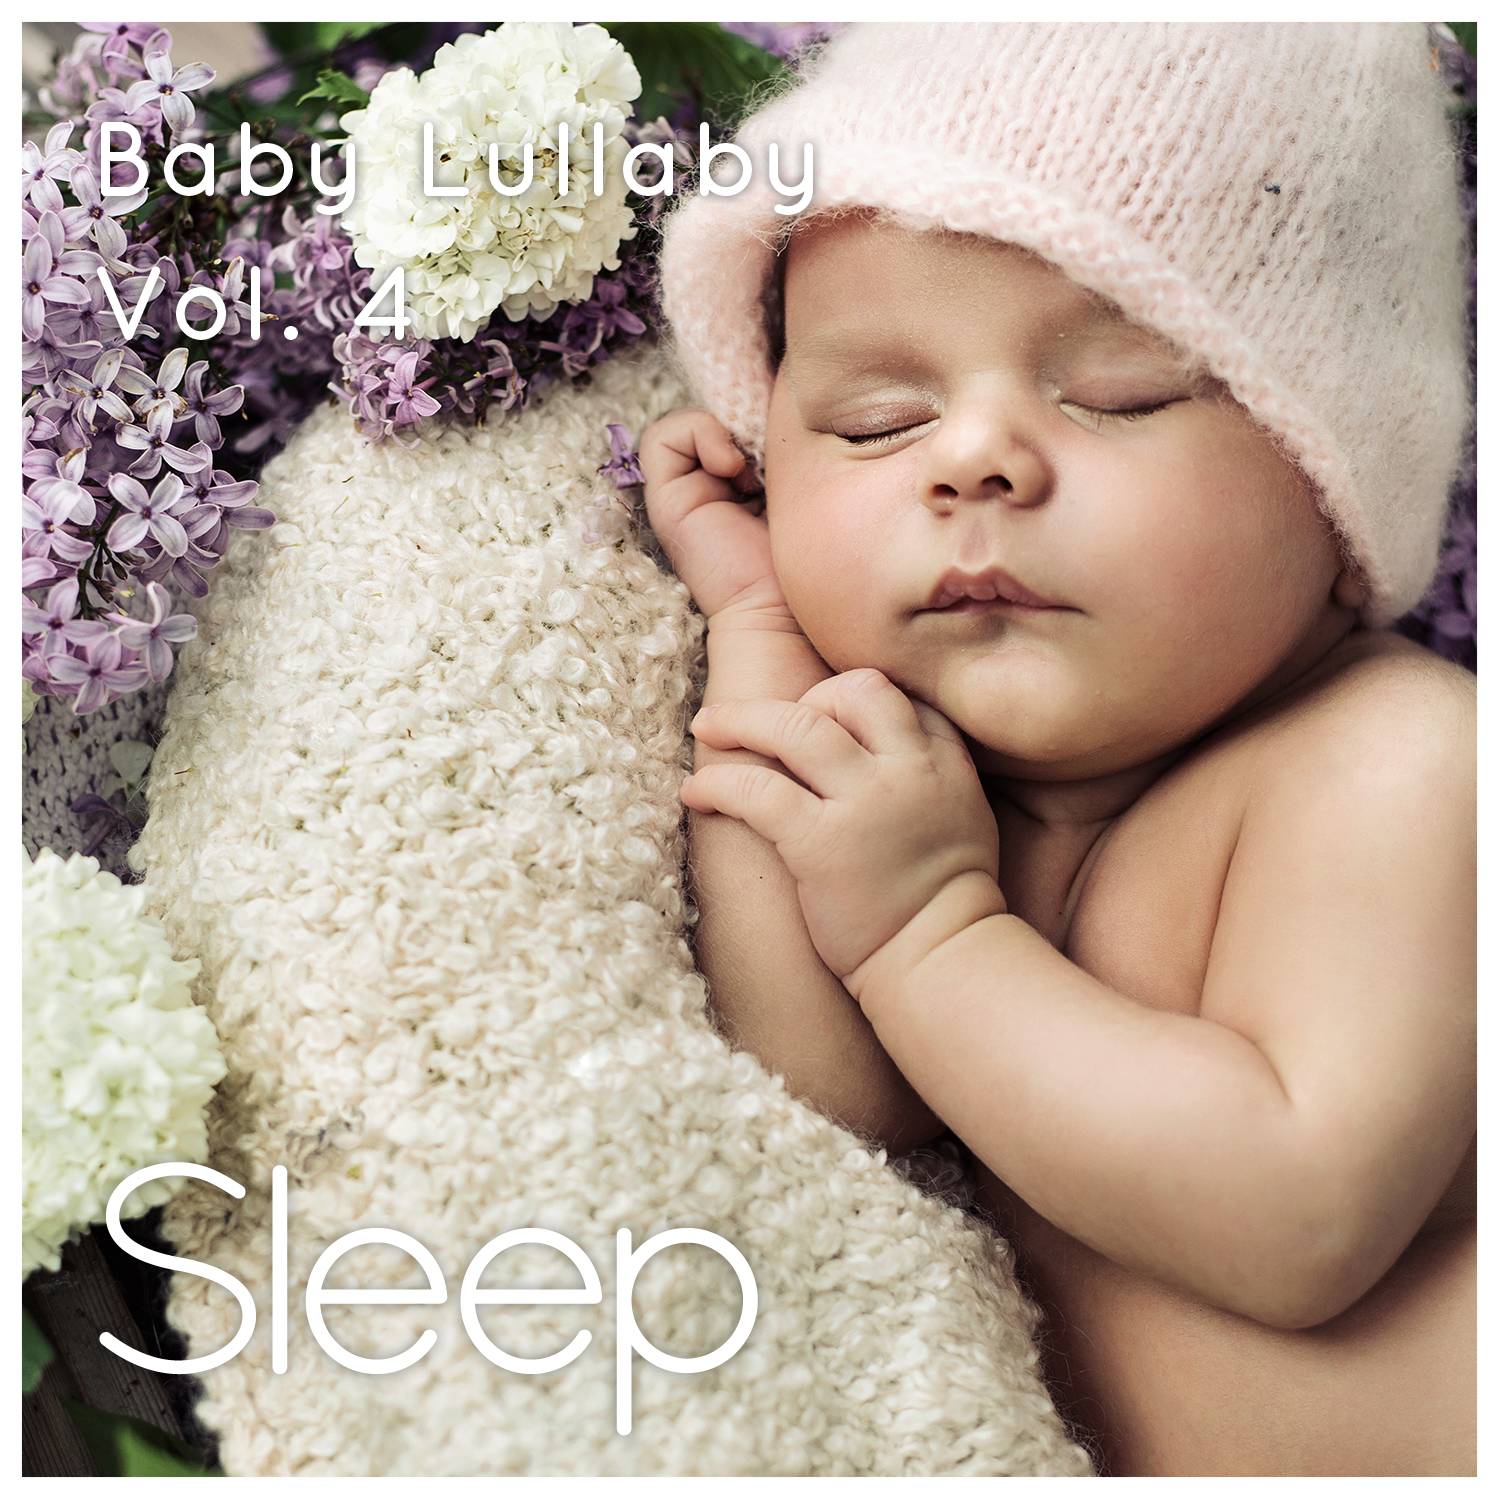 Baby Sleep - The Tumble Dryer Lullaby, Vol. 4